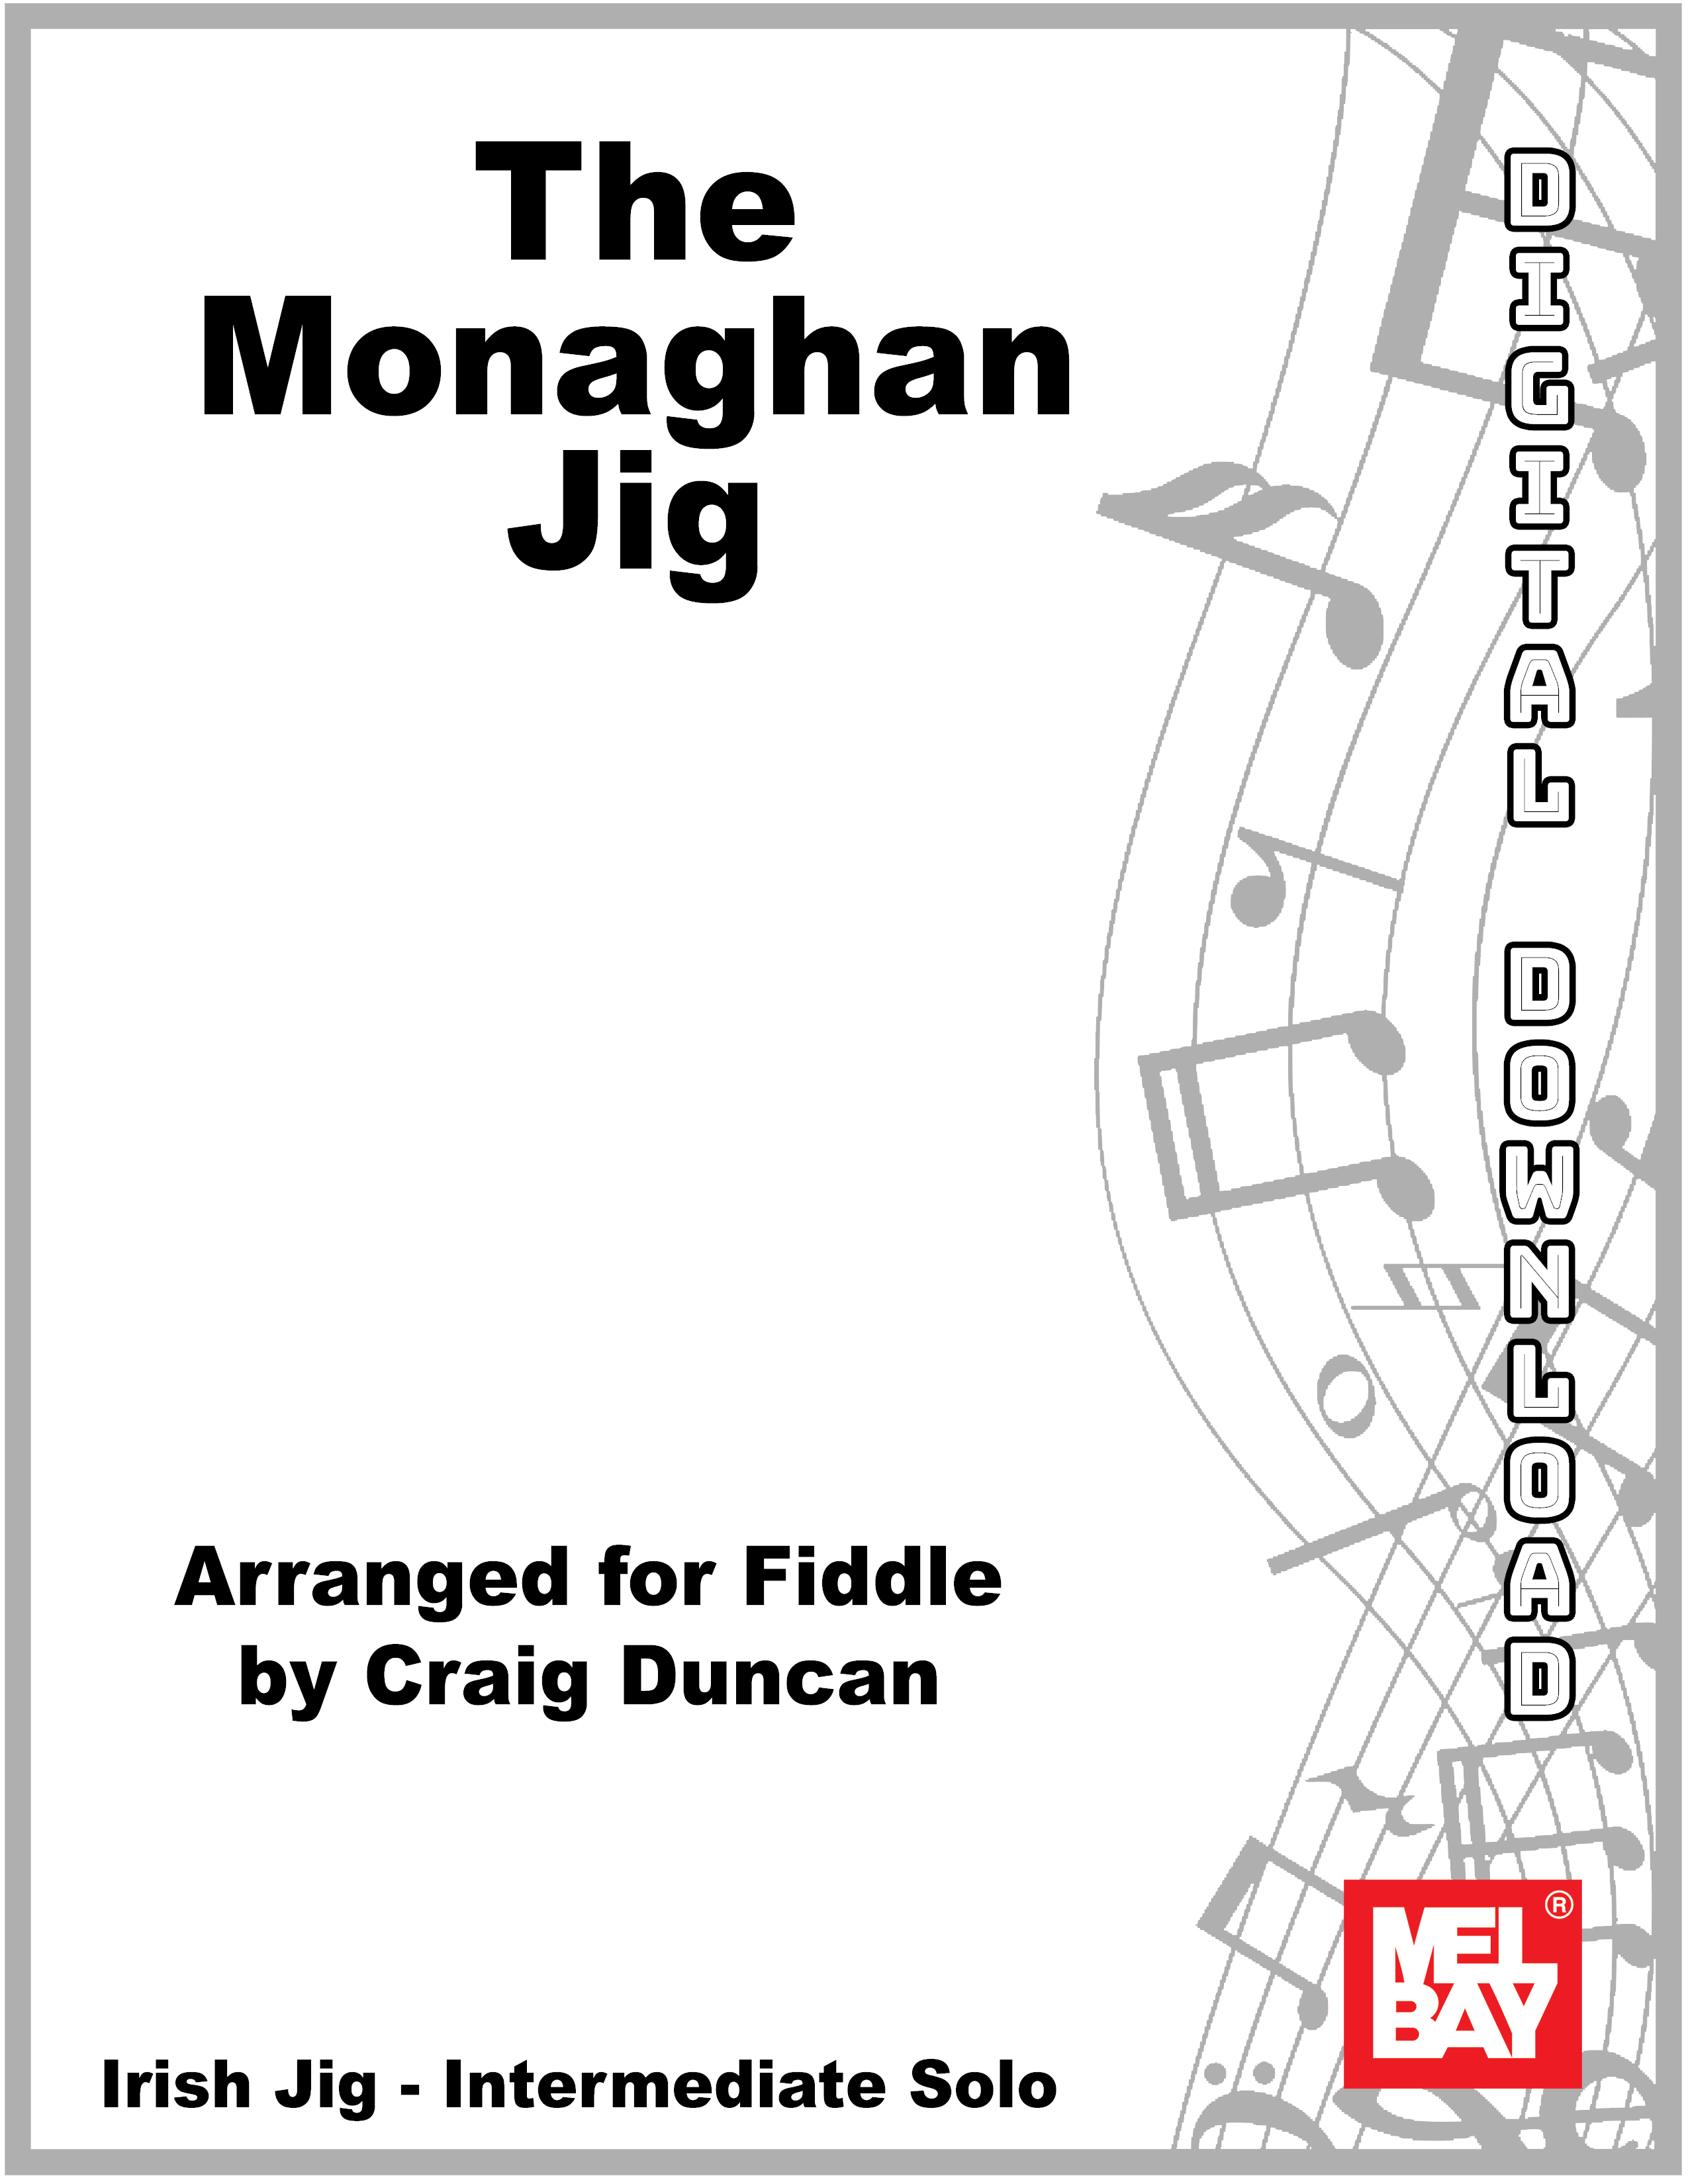 The Monaghan Jig